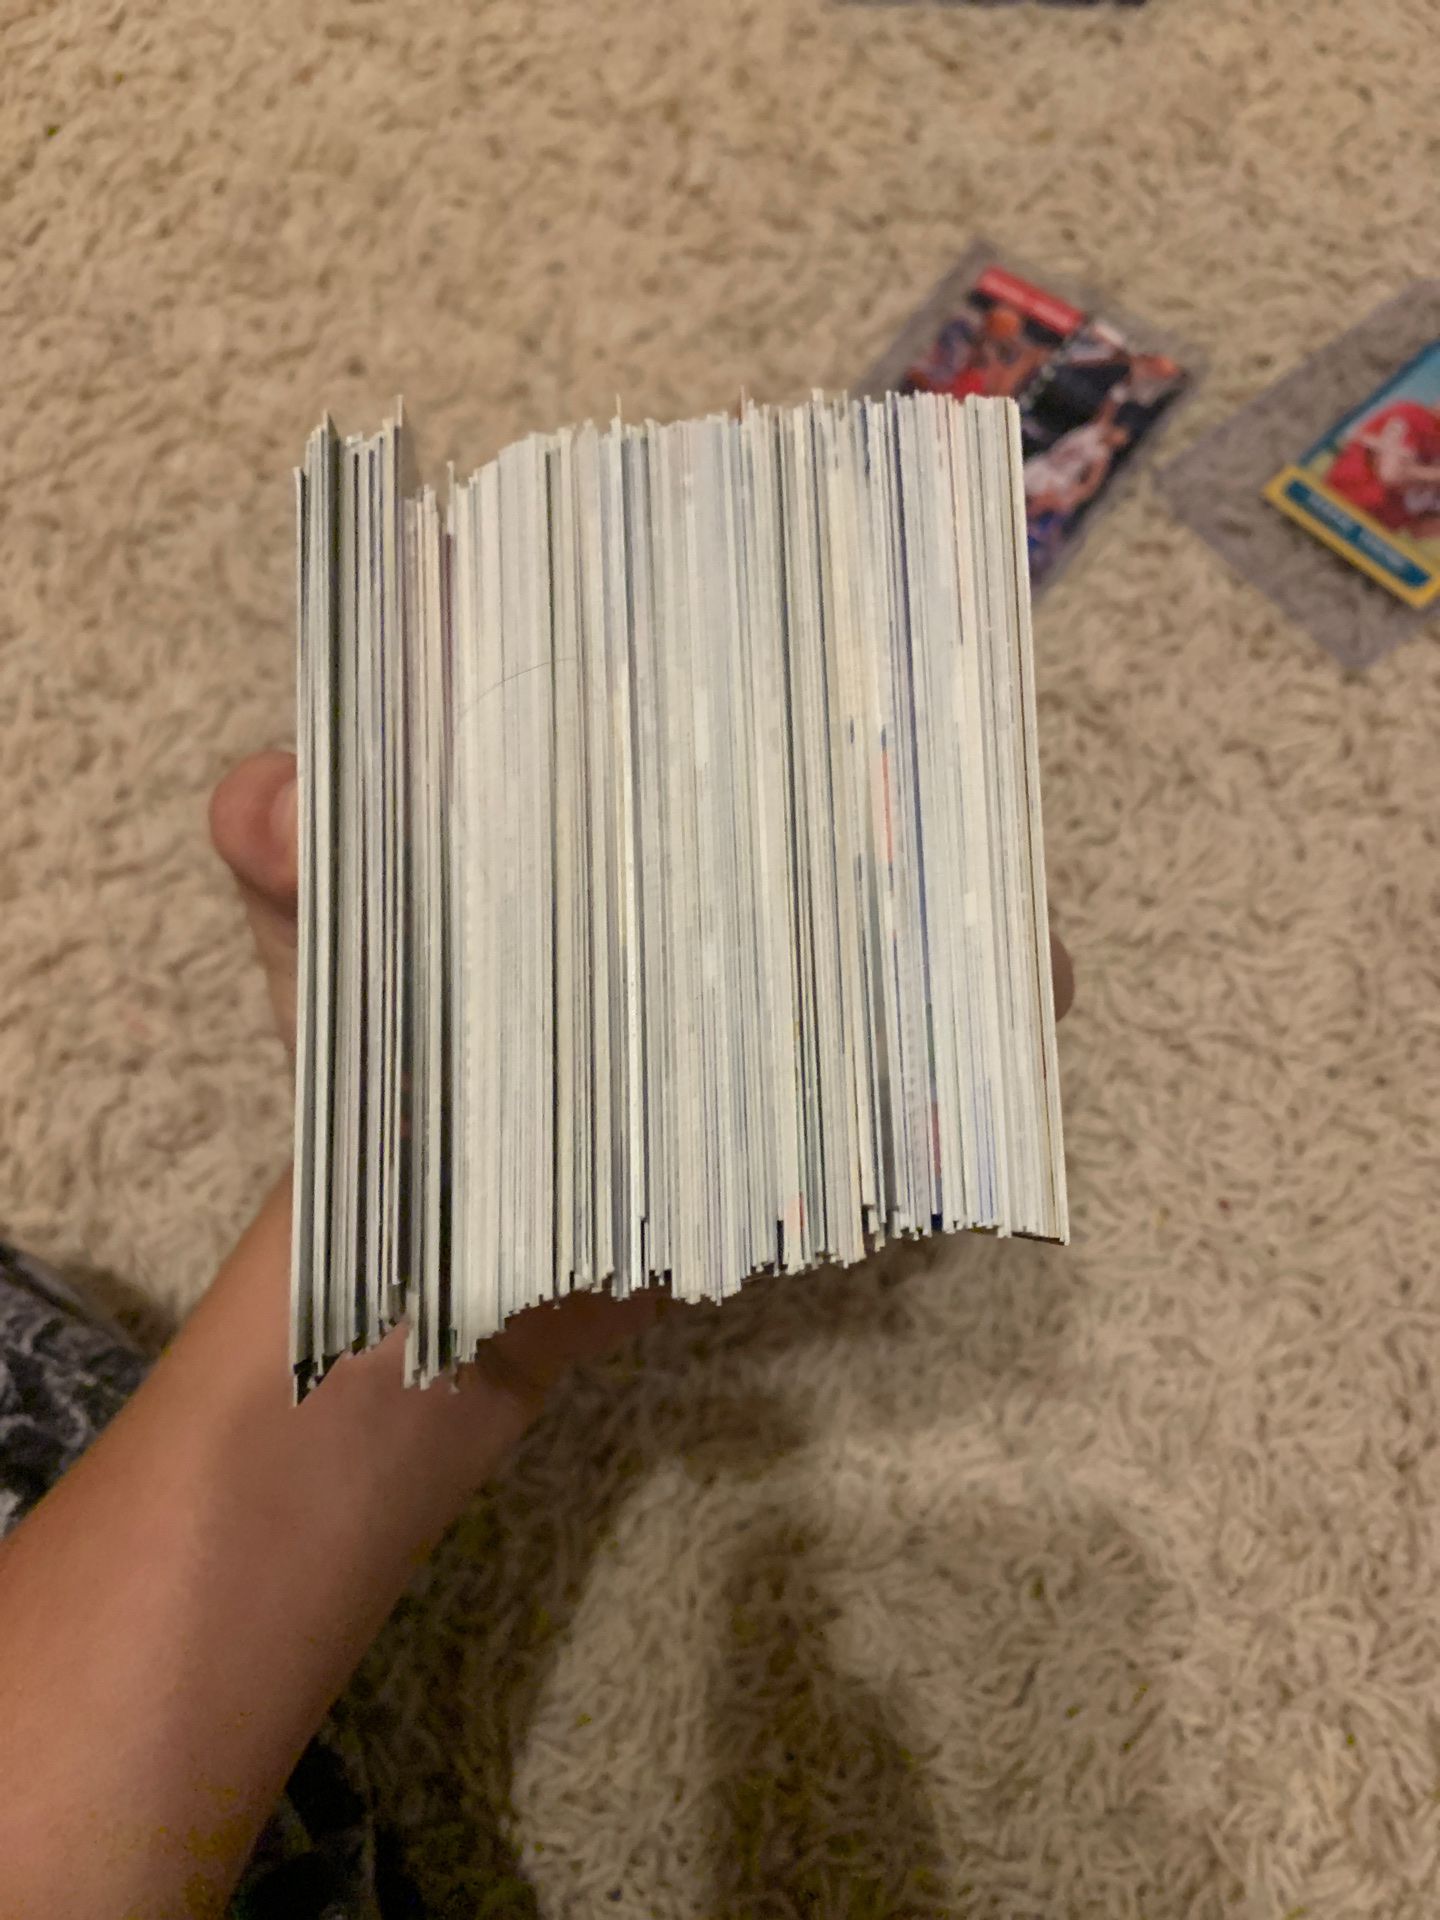 Over 500 basketball cards